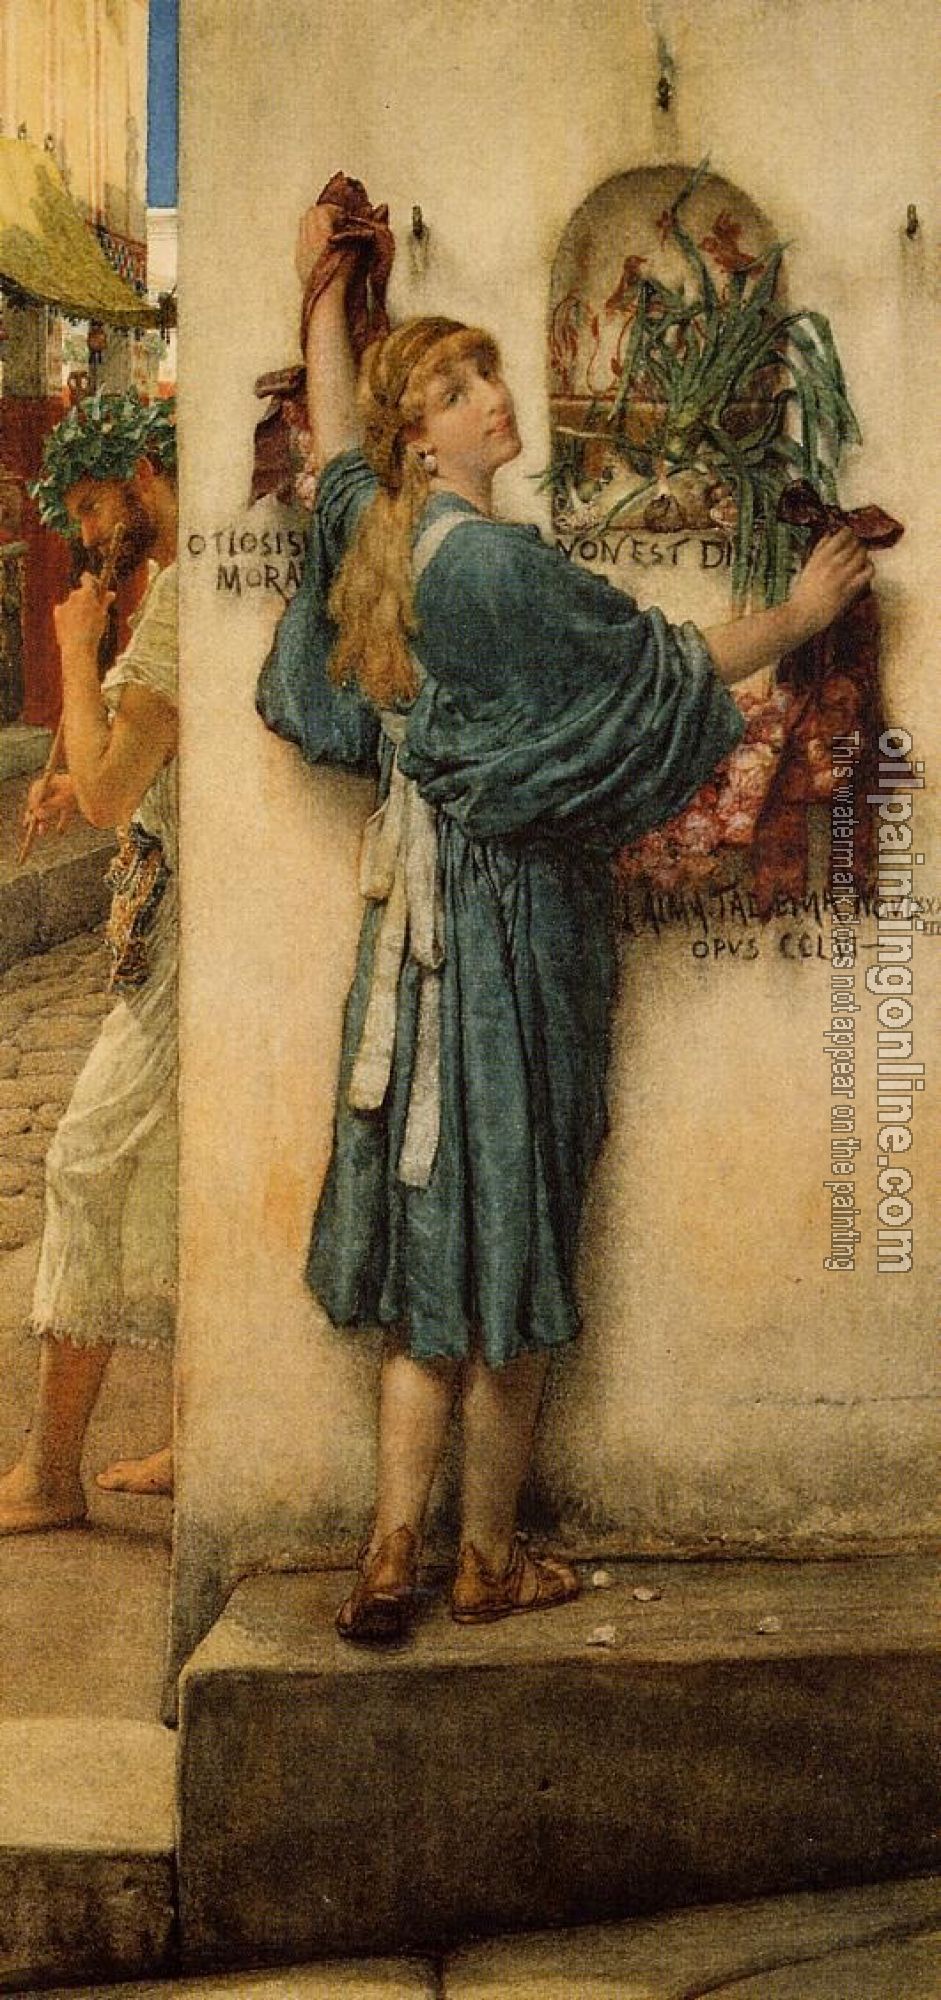 Alma-Tadema, Sir Lawrence - A Street Alter